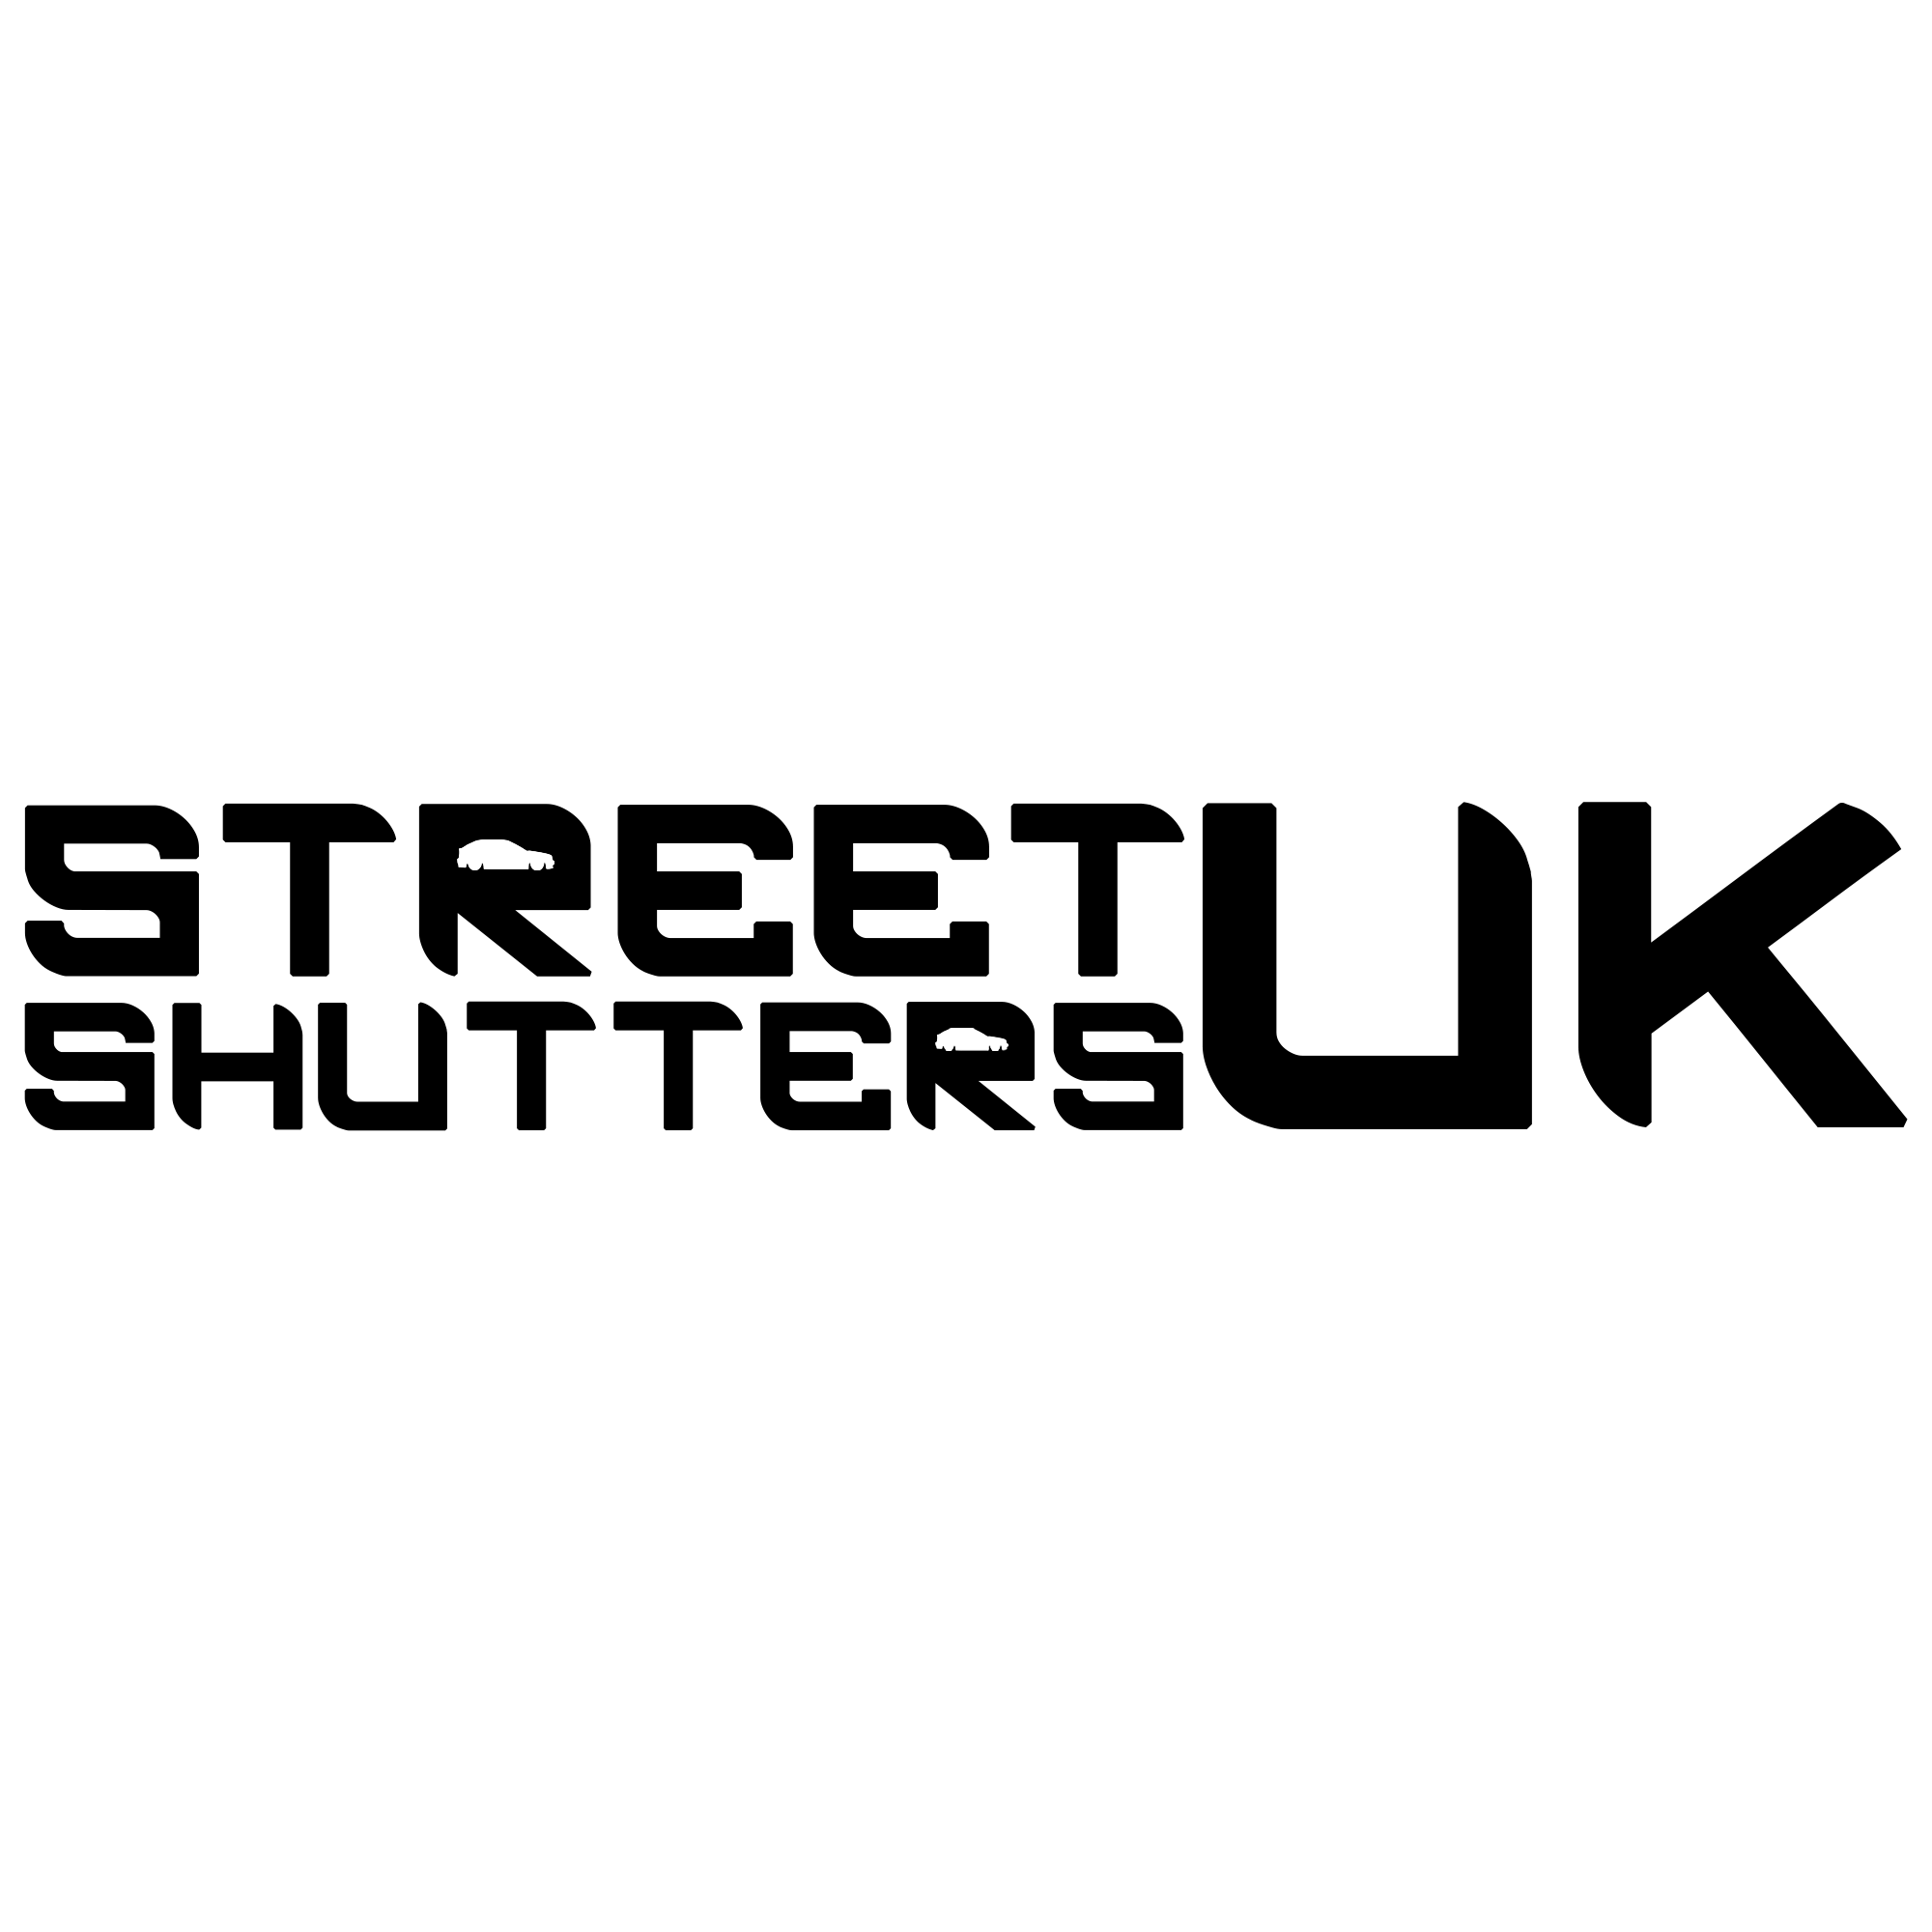 streetshutters Stickers